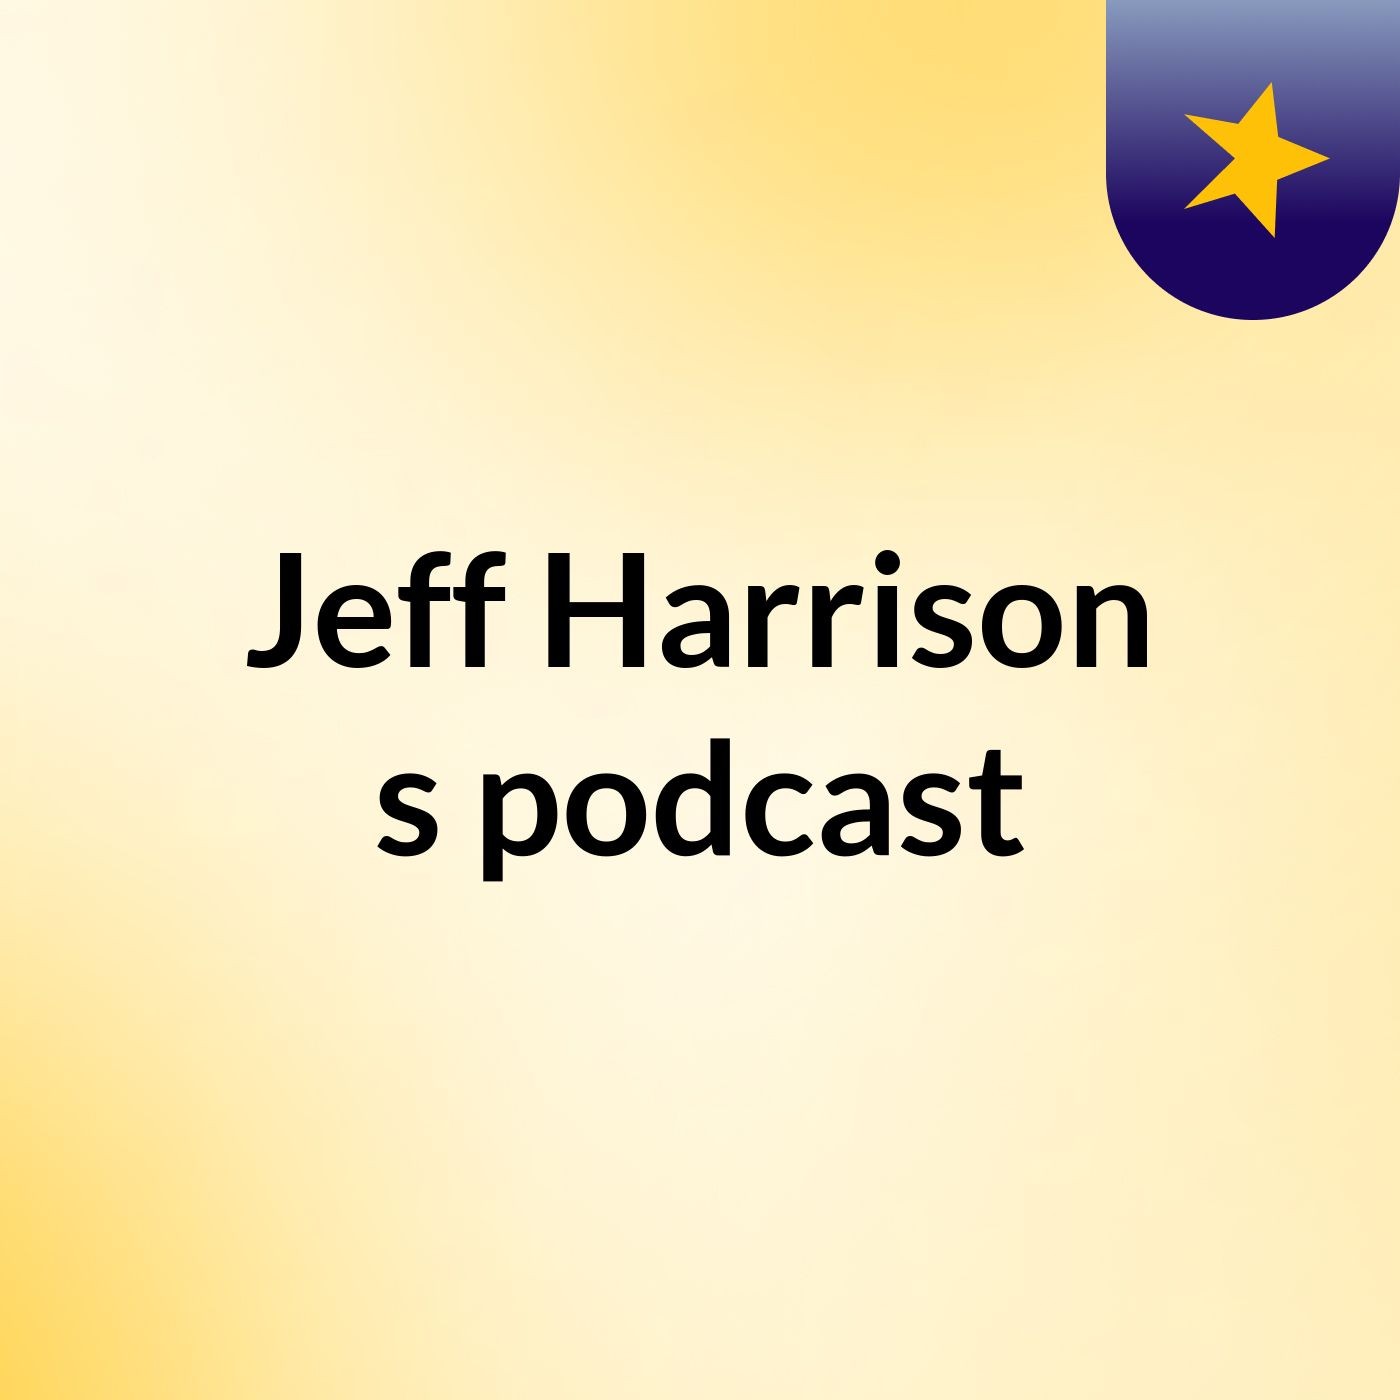 Jeff Harrison's podcast